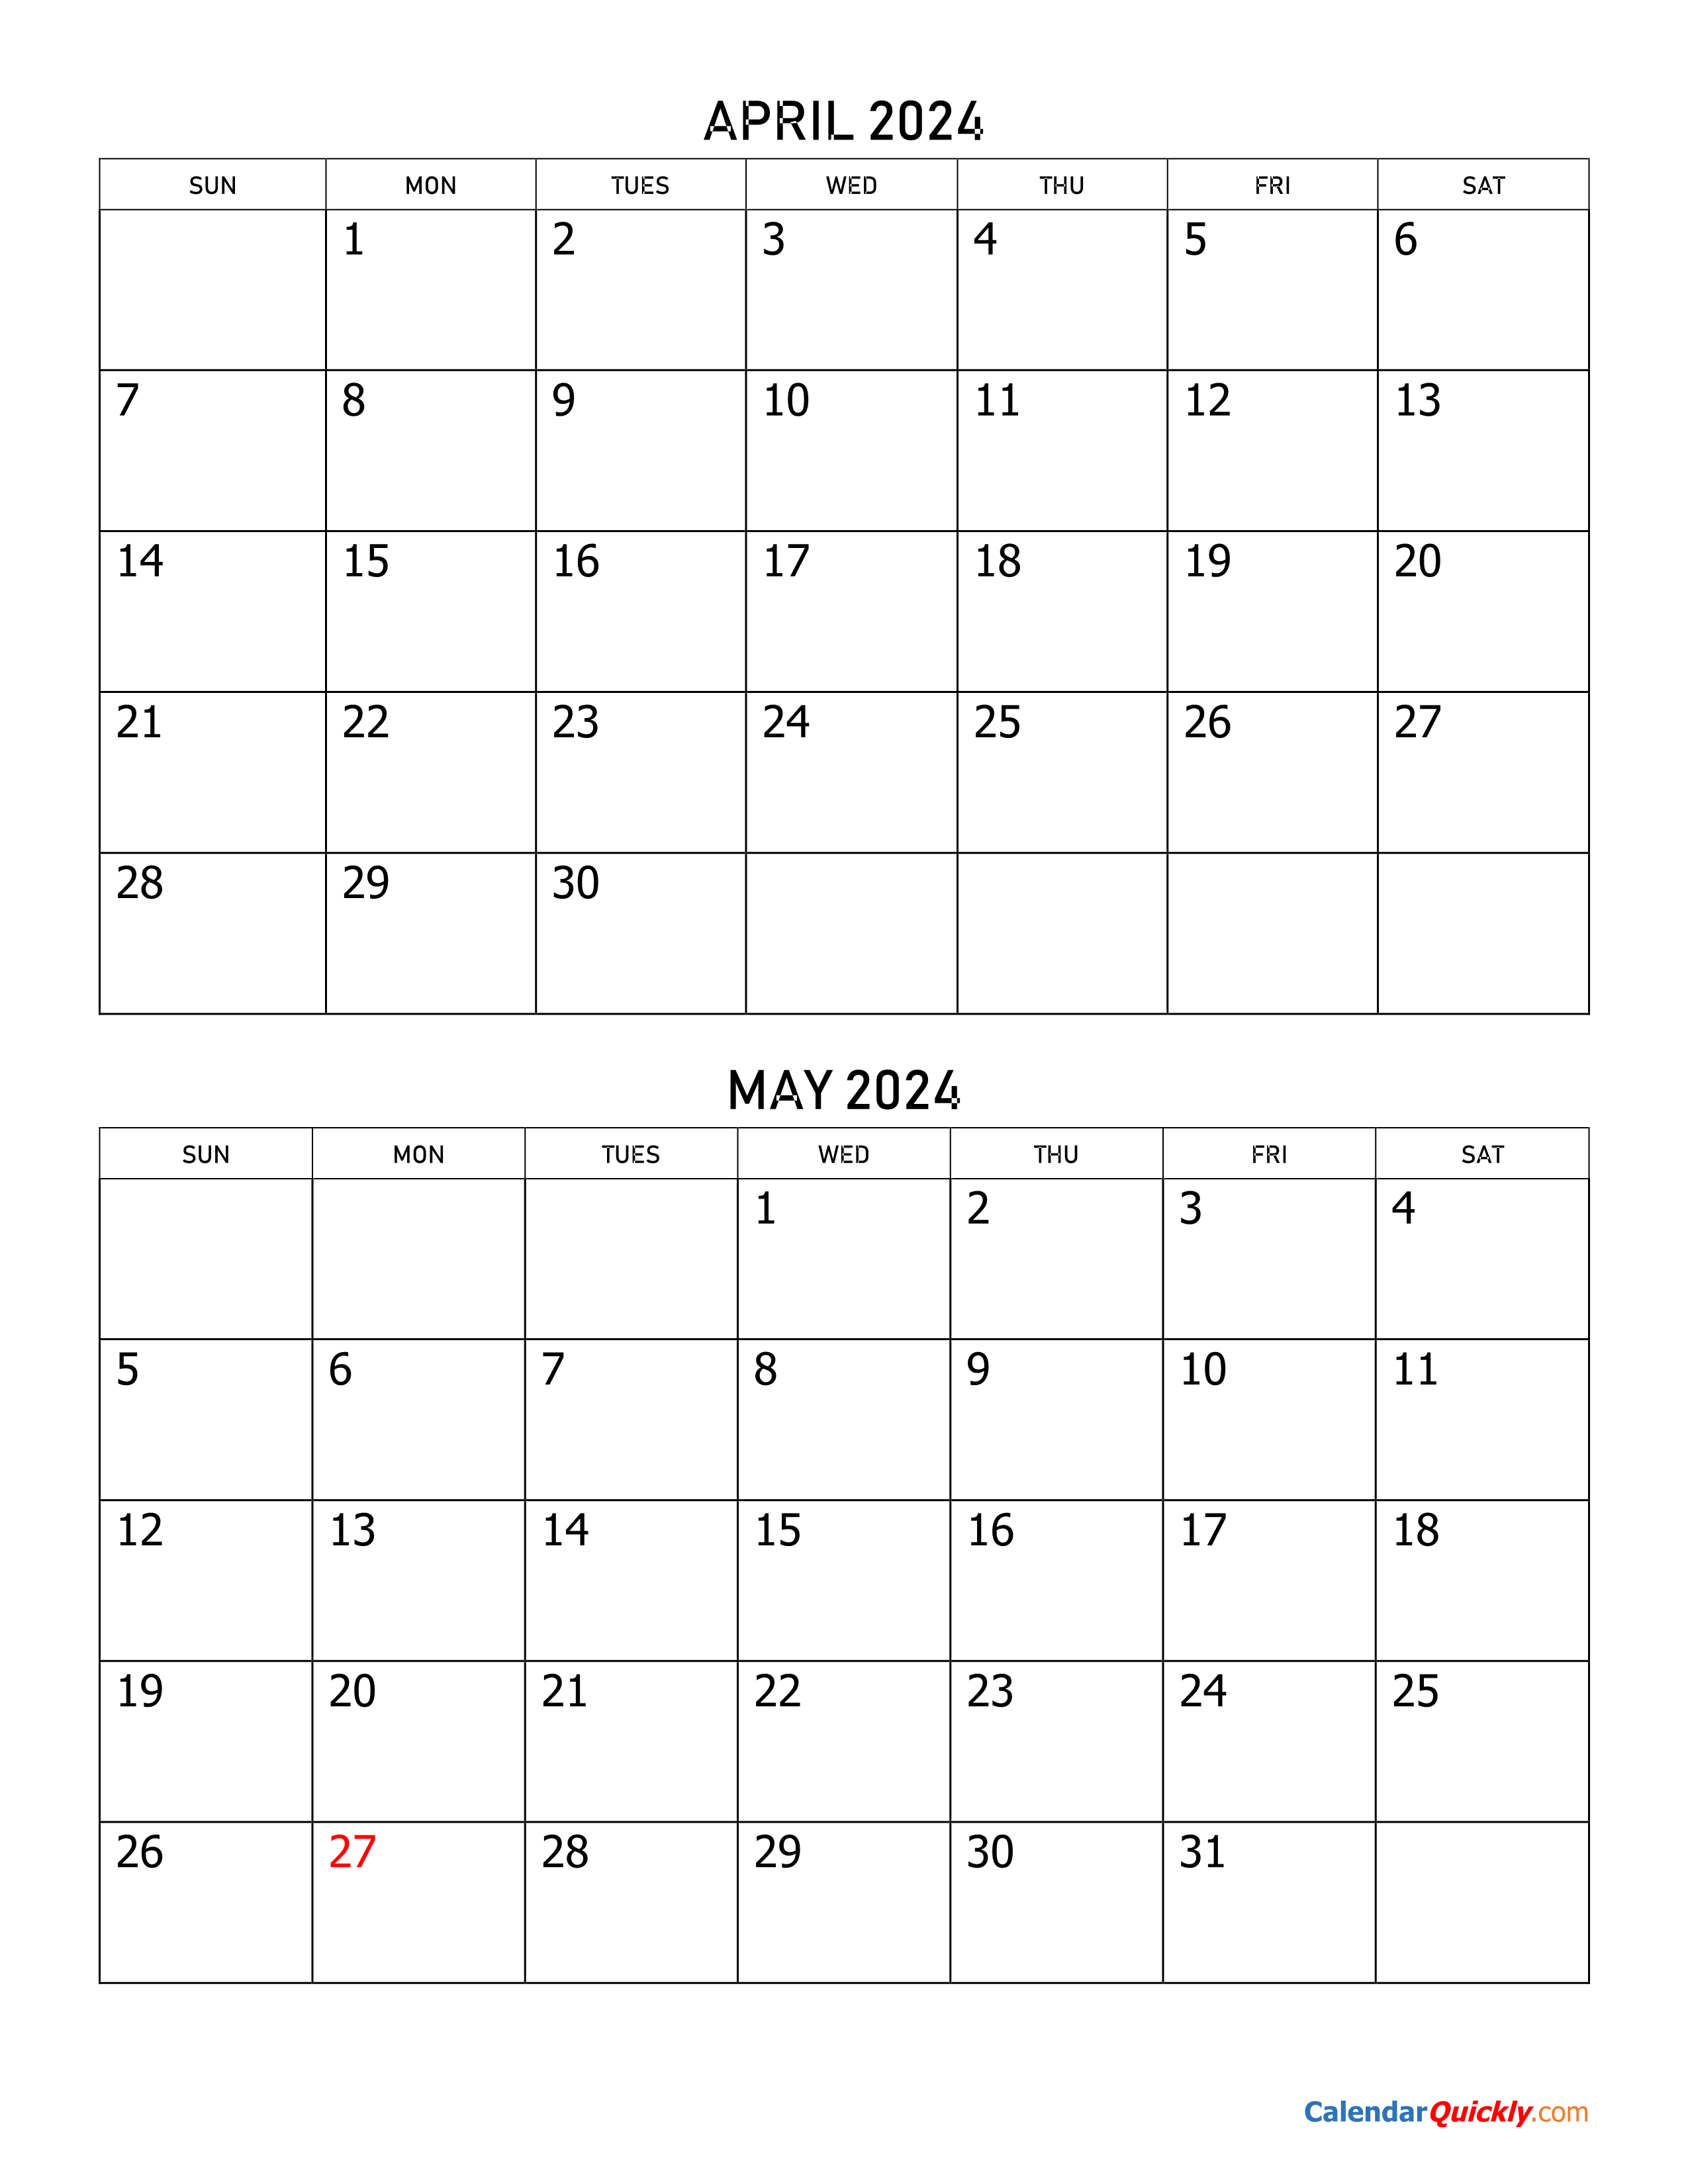 april-and-may-2024-calendar-calendar-quickly-april-2023-calendars-free-2023-calendar